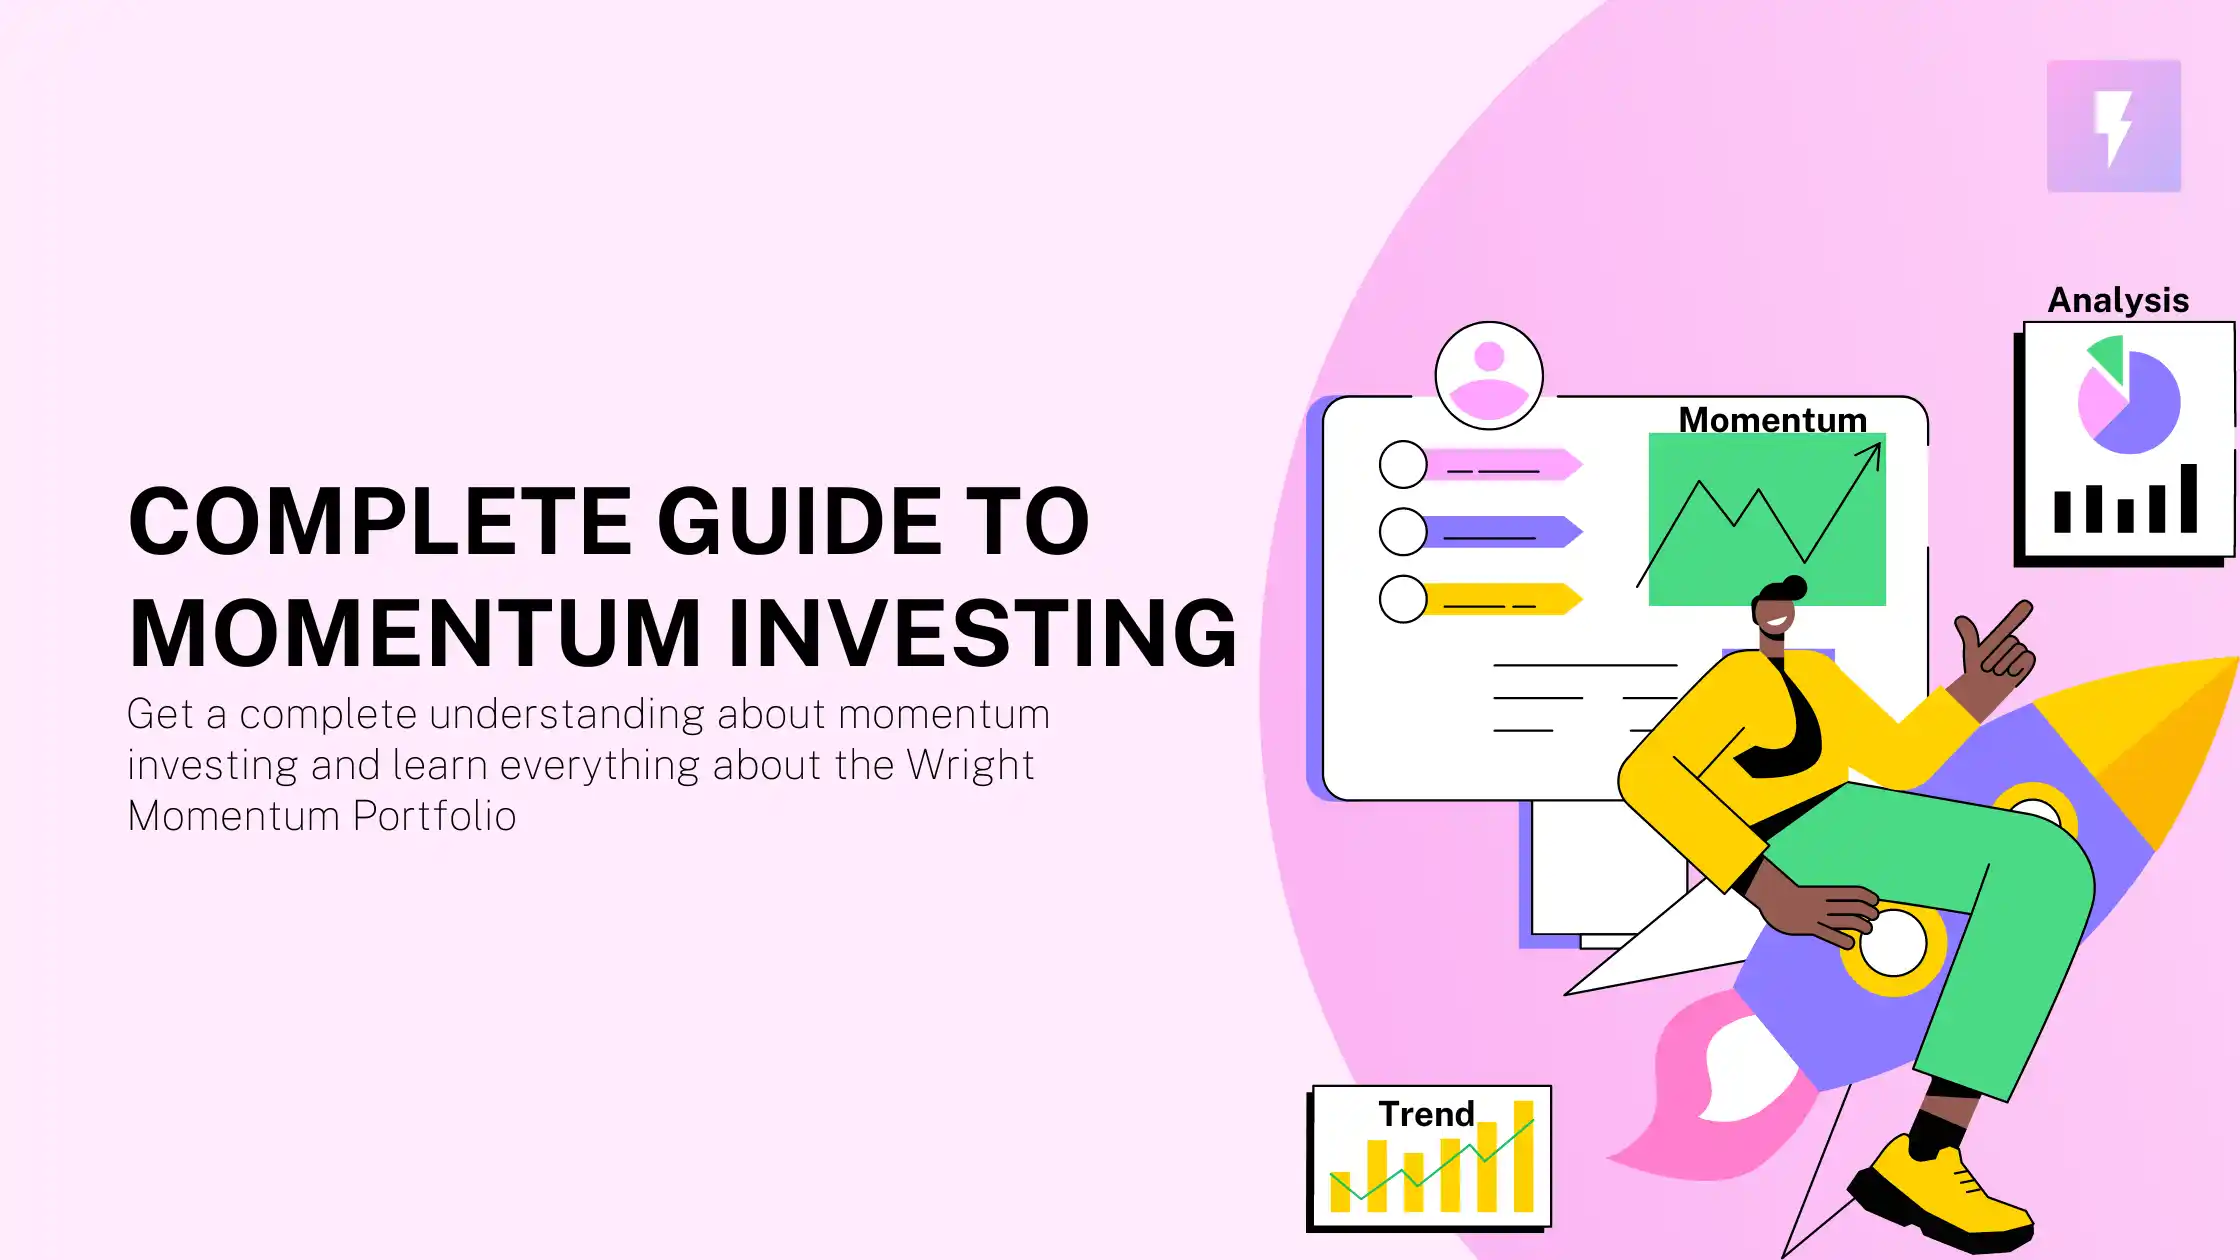 Complete guide to Momentum Investing & the Wright Momentum Portfolio